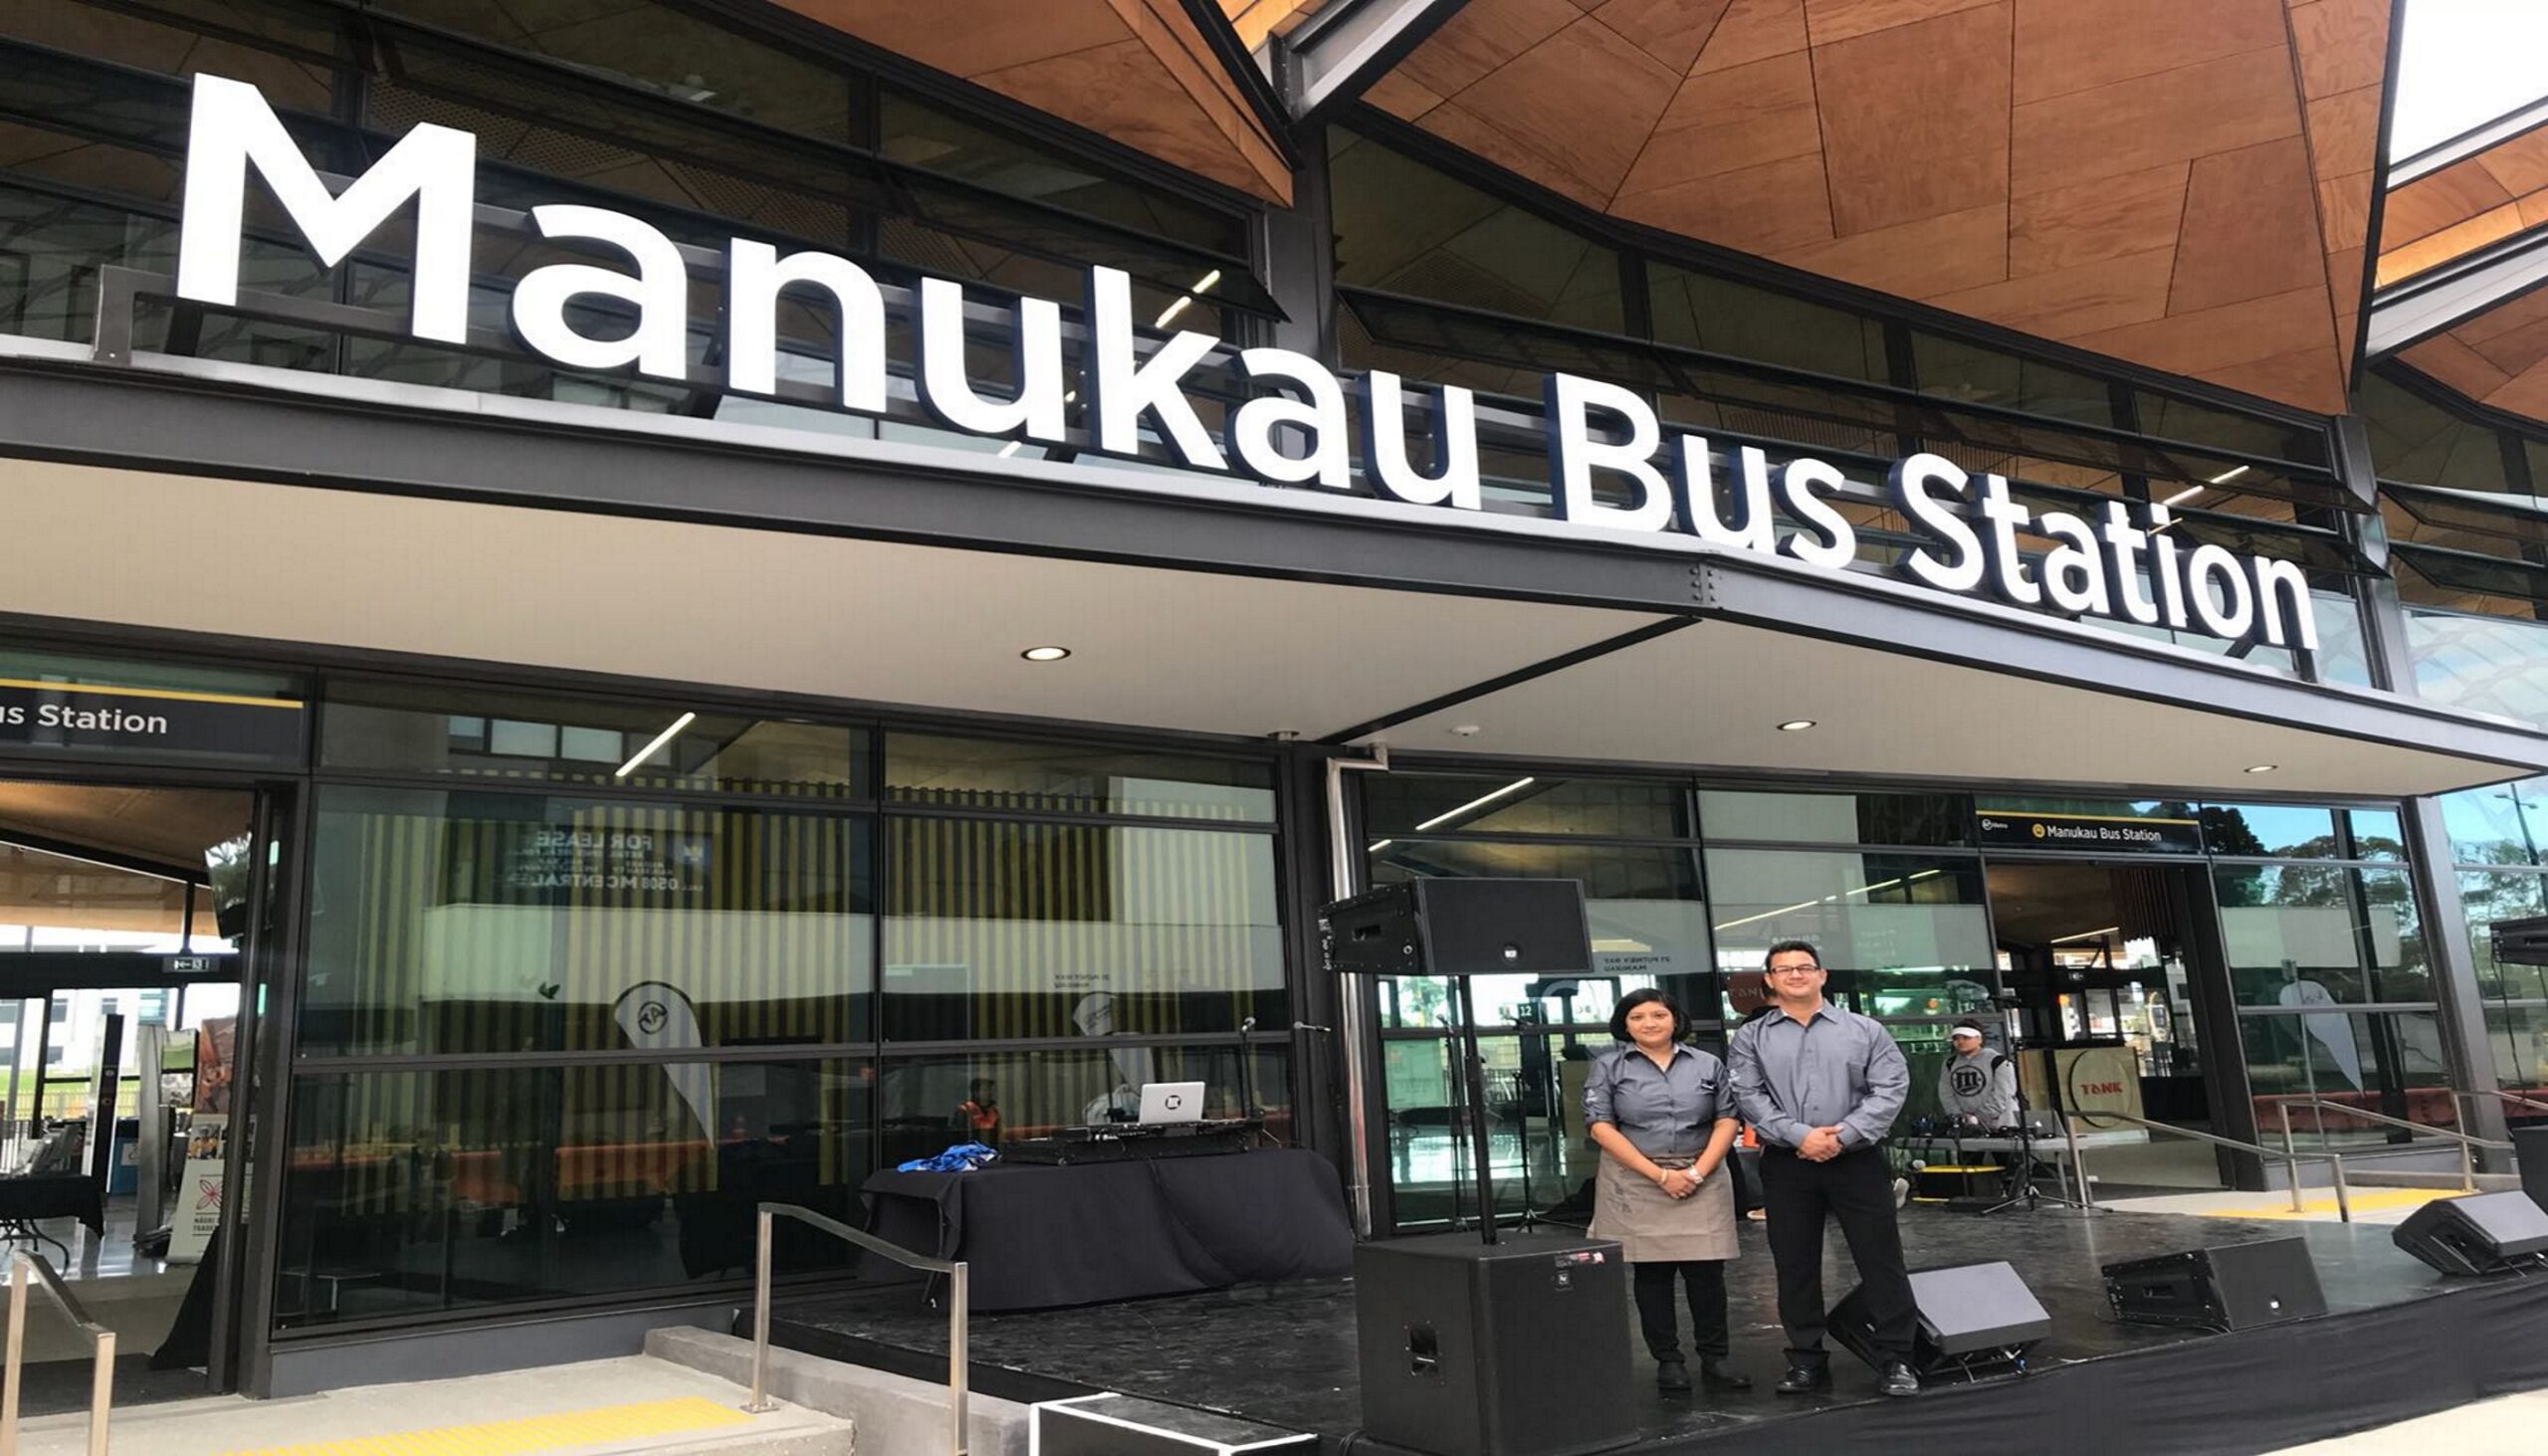 Jamaica Blue Manukau Bus Station Opens in New Zealand!